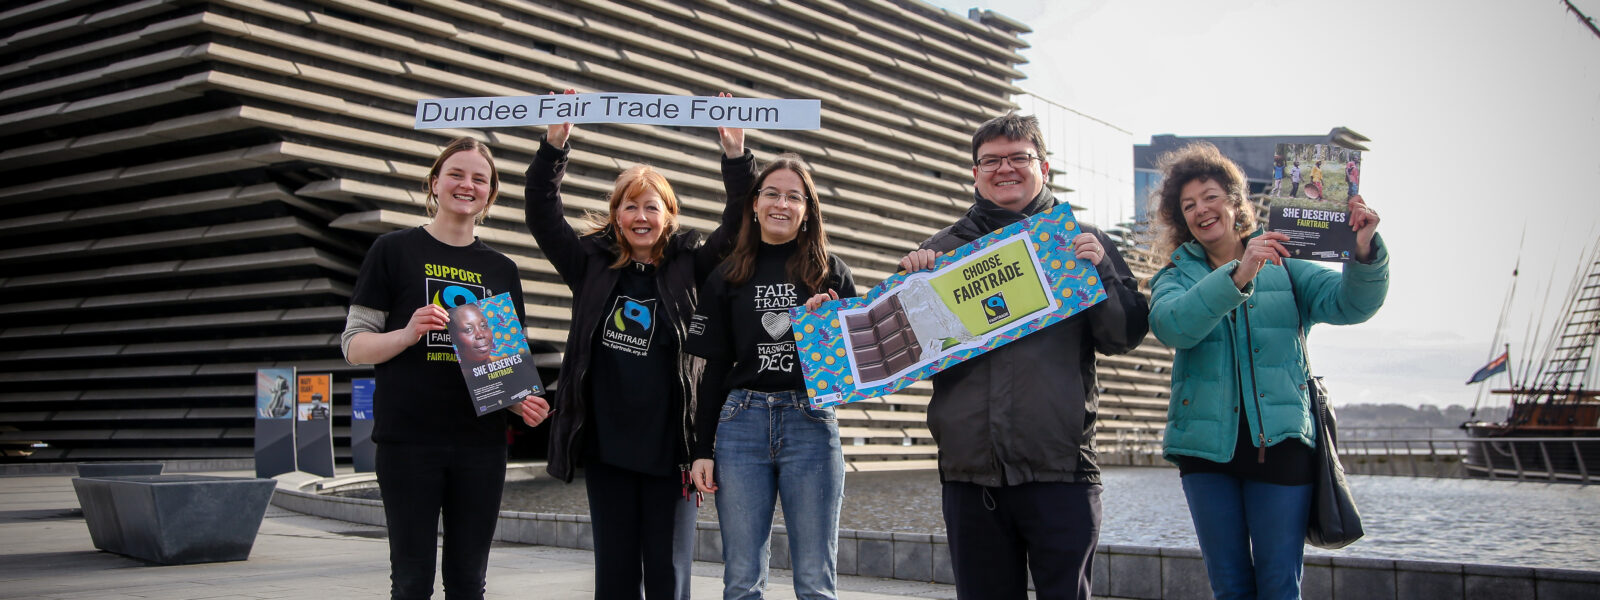 Dundee Fair Trade group holding Fair Trade banners.